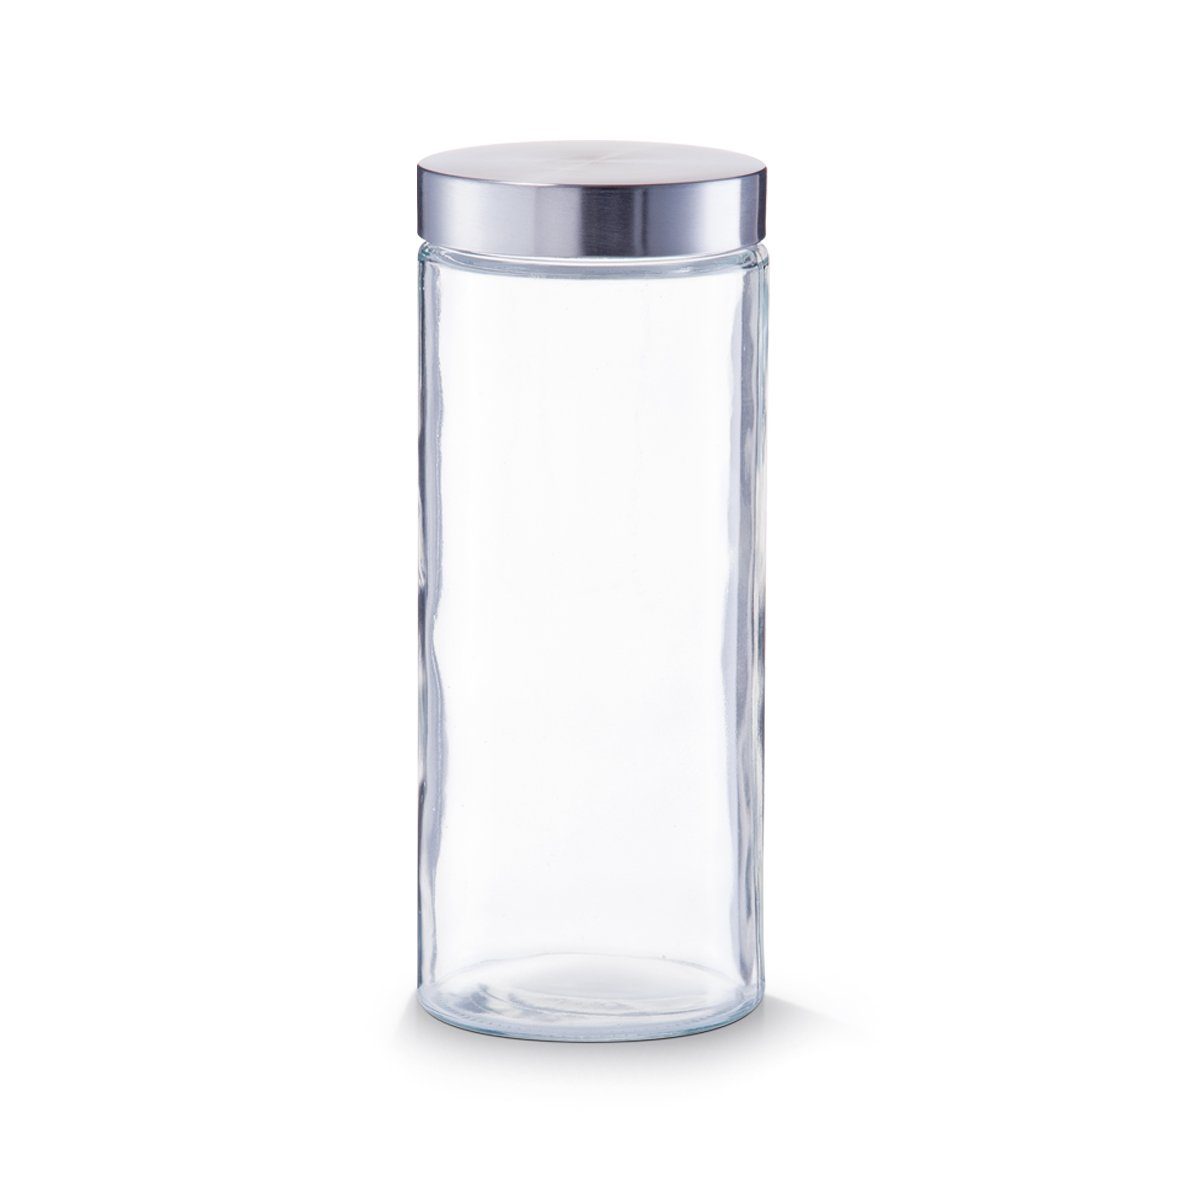 Edelstahldeckel, Present 2100 ml, Ø11 Glas/Edelstahl, Glas/Edelstahl, 27 x Vorratsglas Zeller m. Vorratsglas transparent, cm